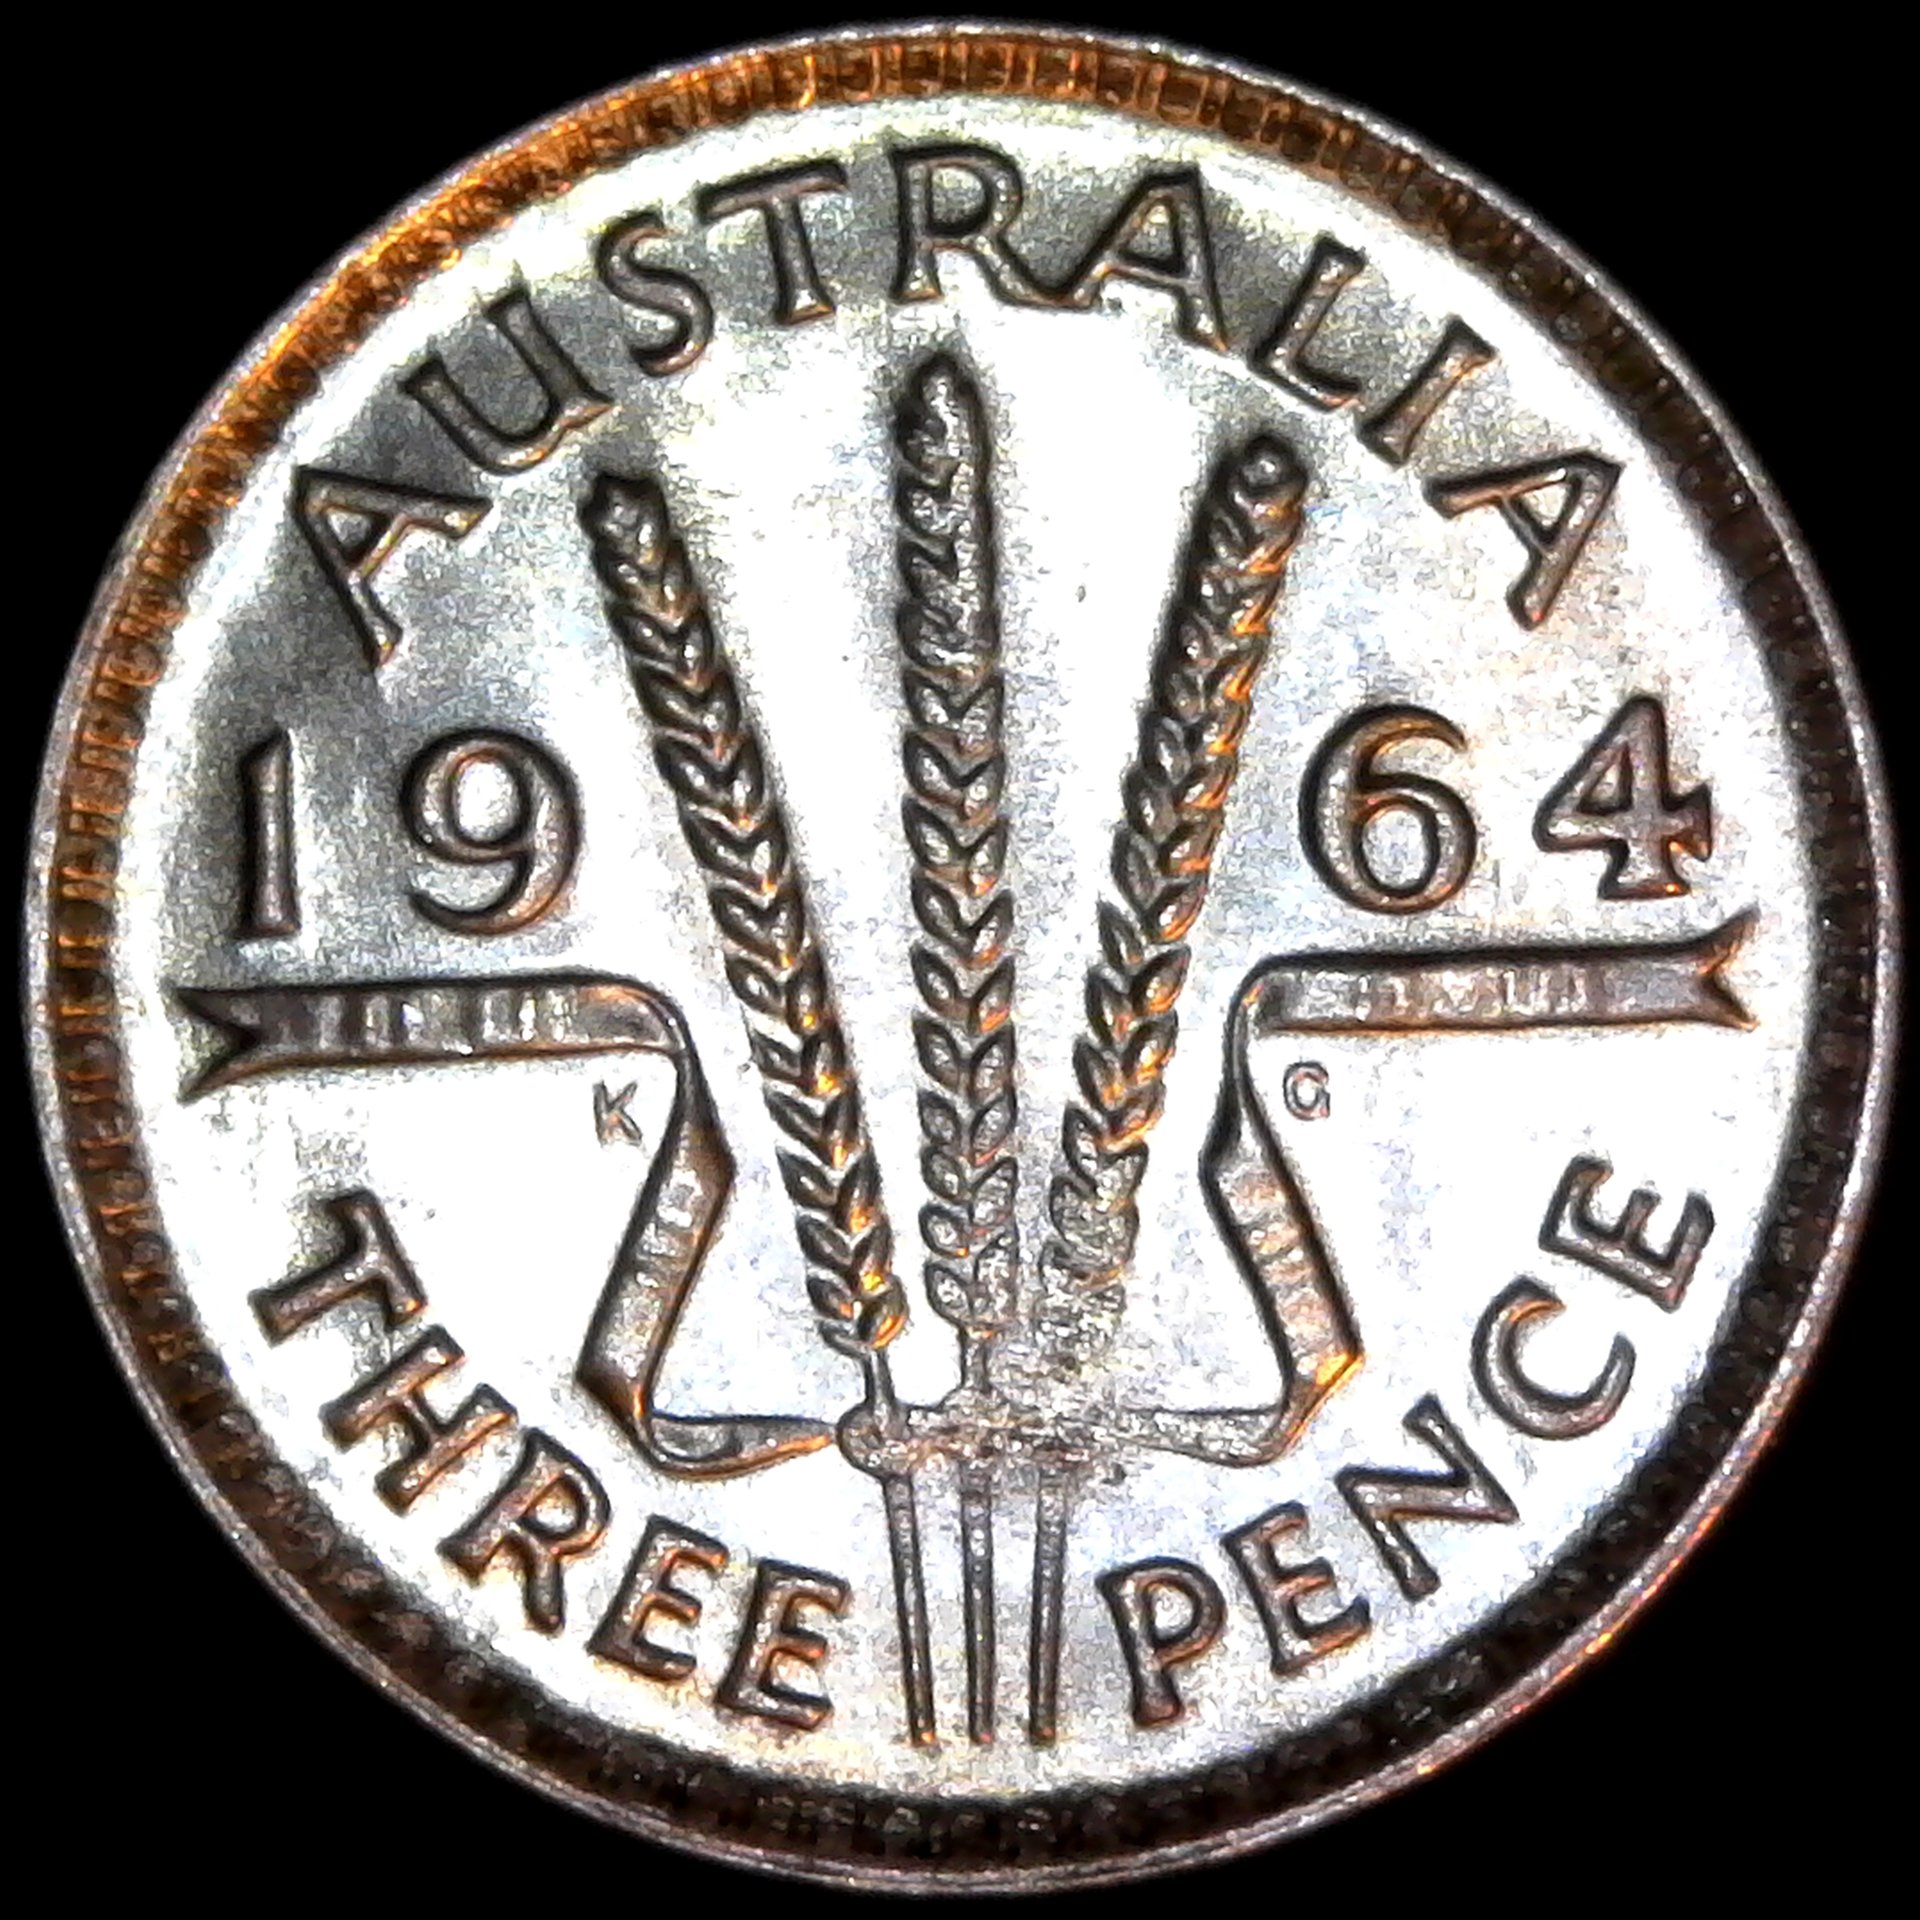 Australia Three pence 1964 rev.jpg